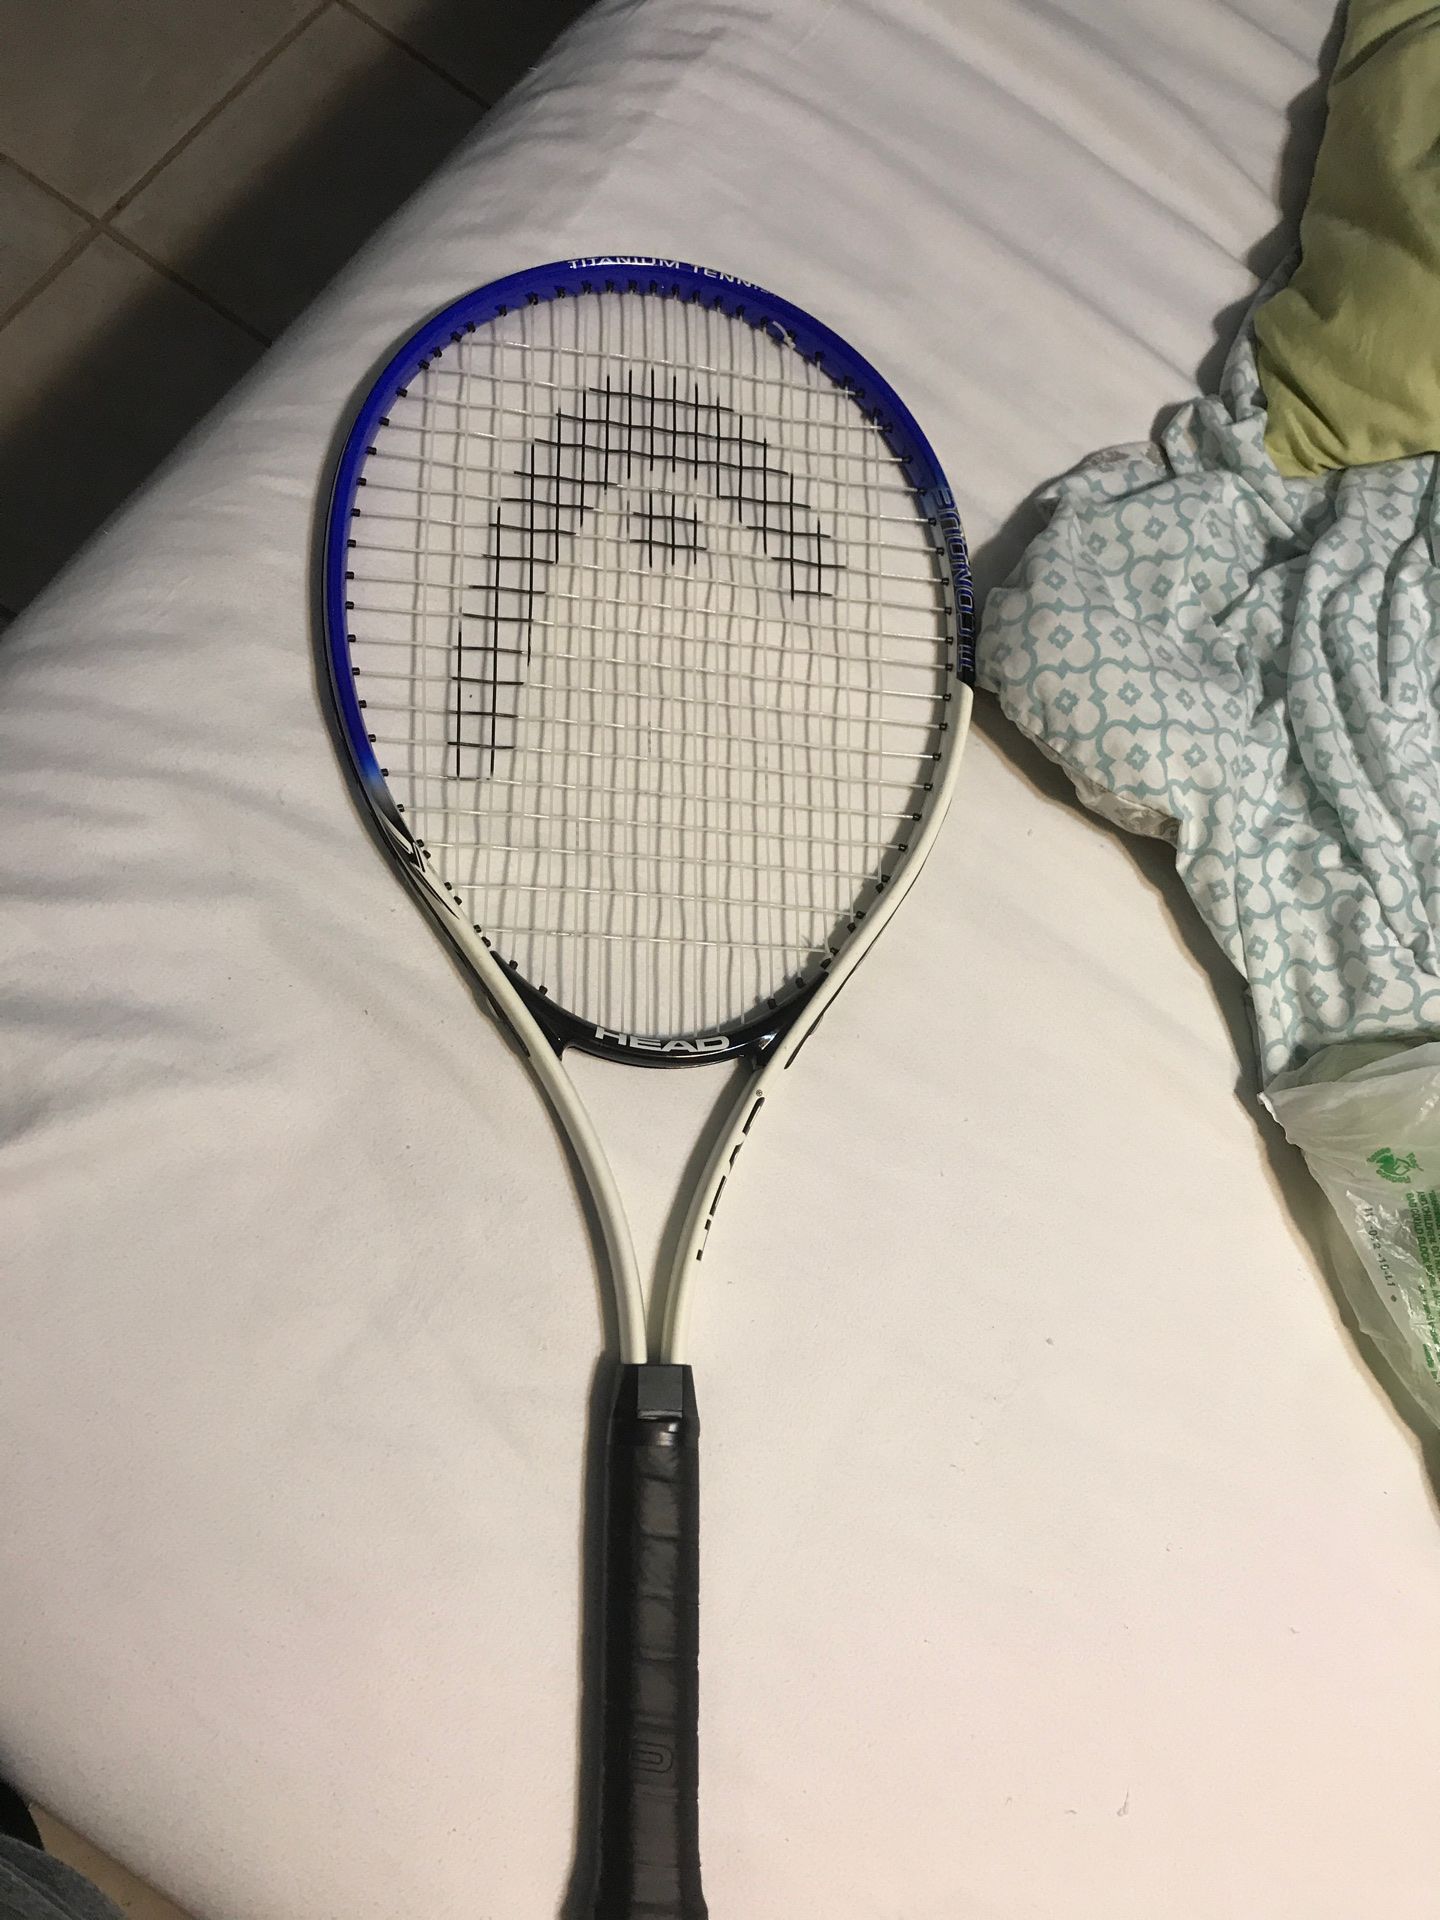 Head racket with 5 tennis balls